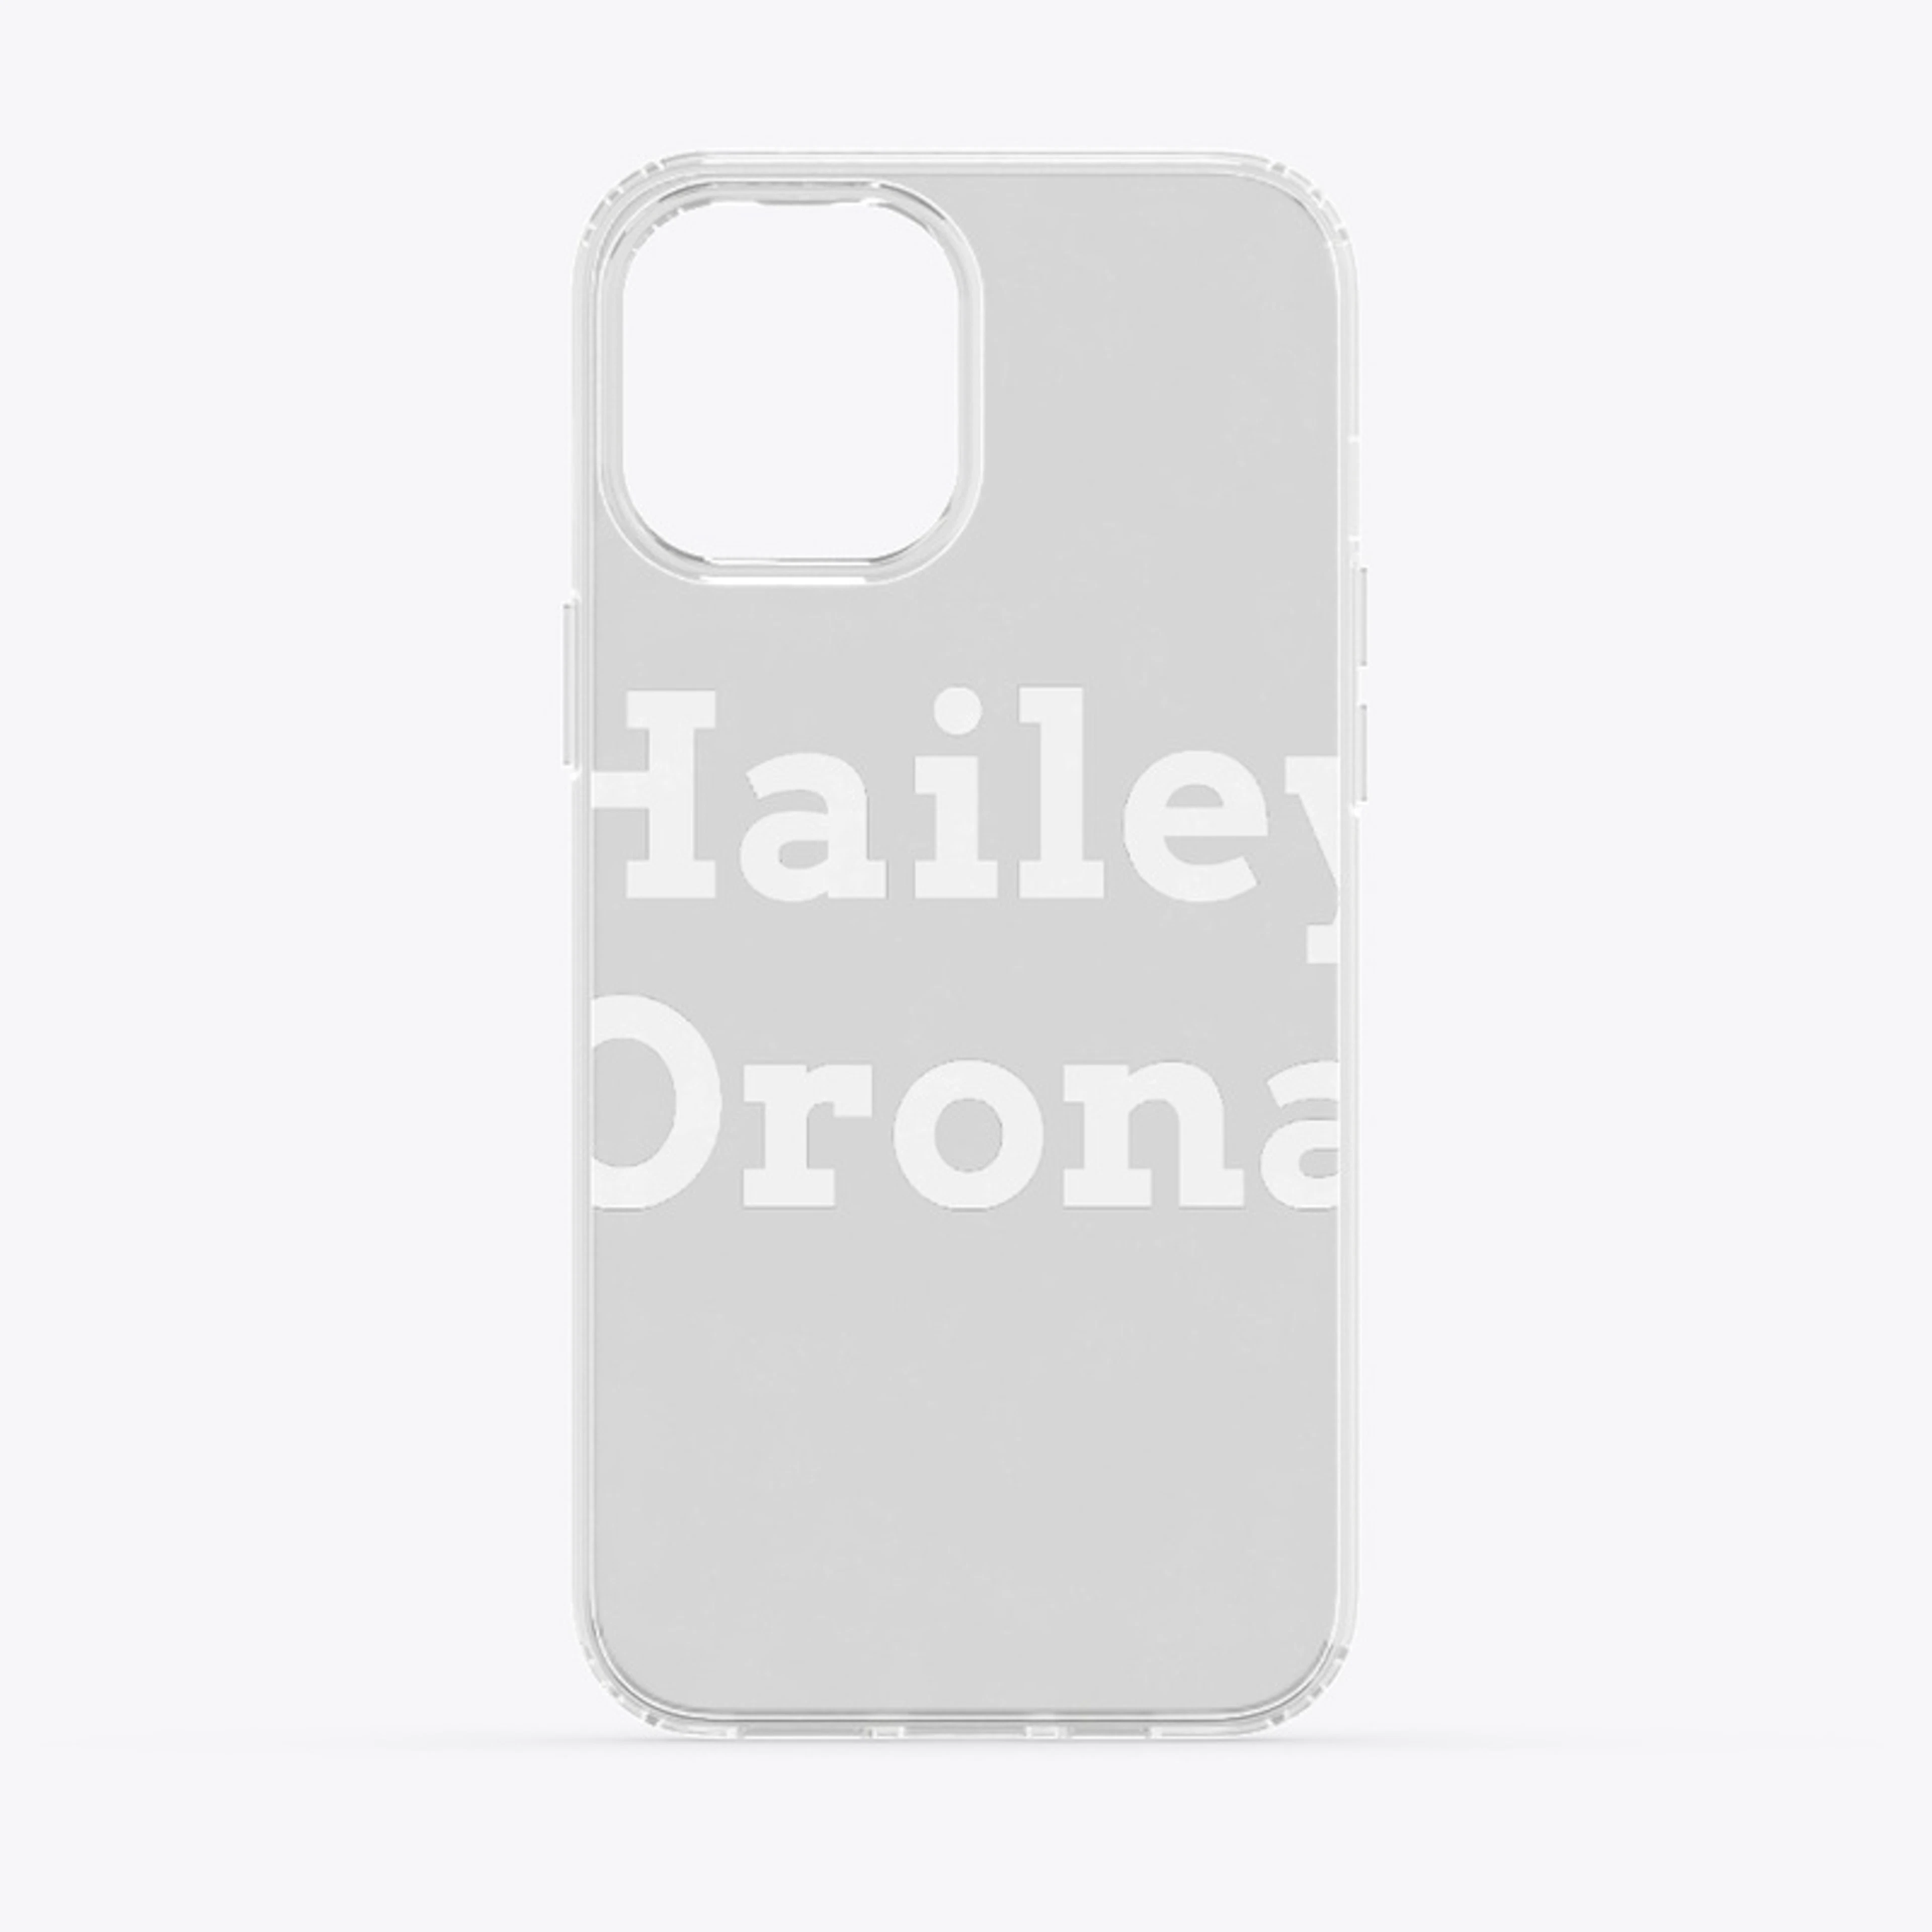 Hailey Orona Merch Logo